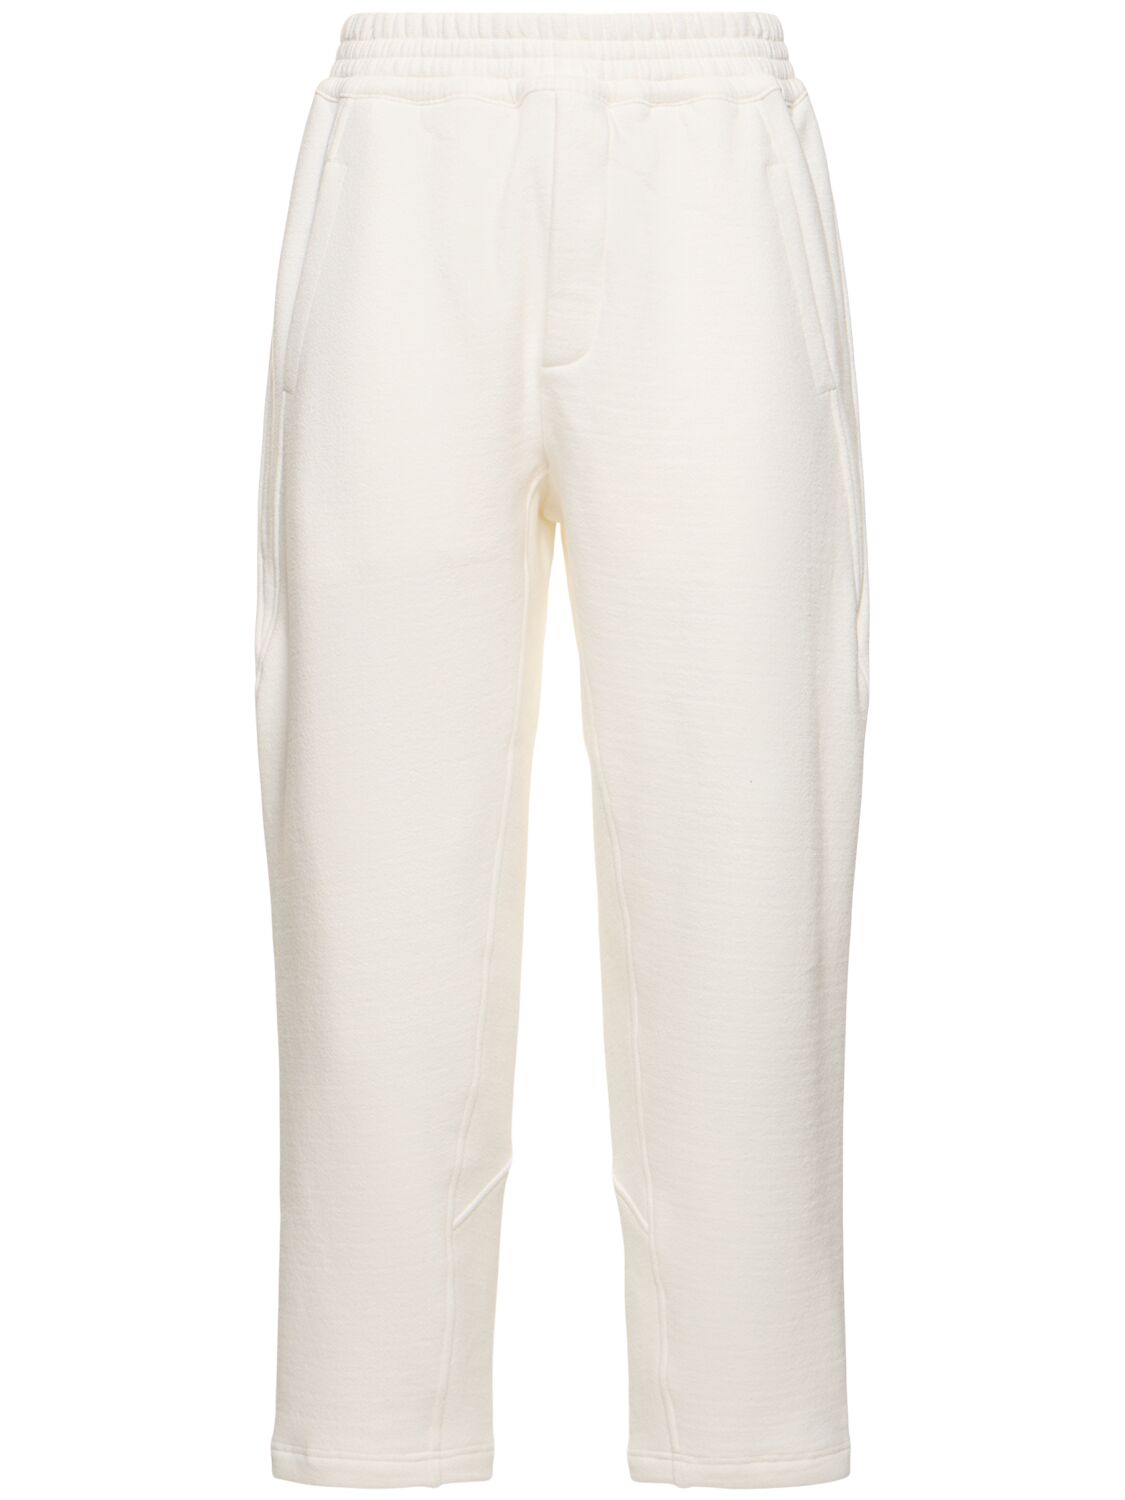 Image of Koa Cotton Blend Jersey Sweatpants